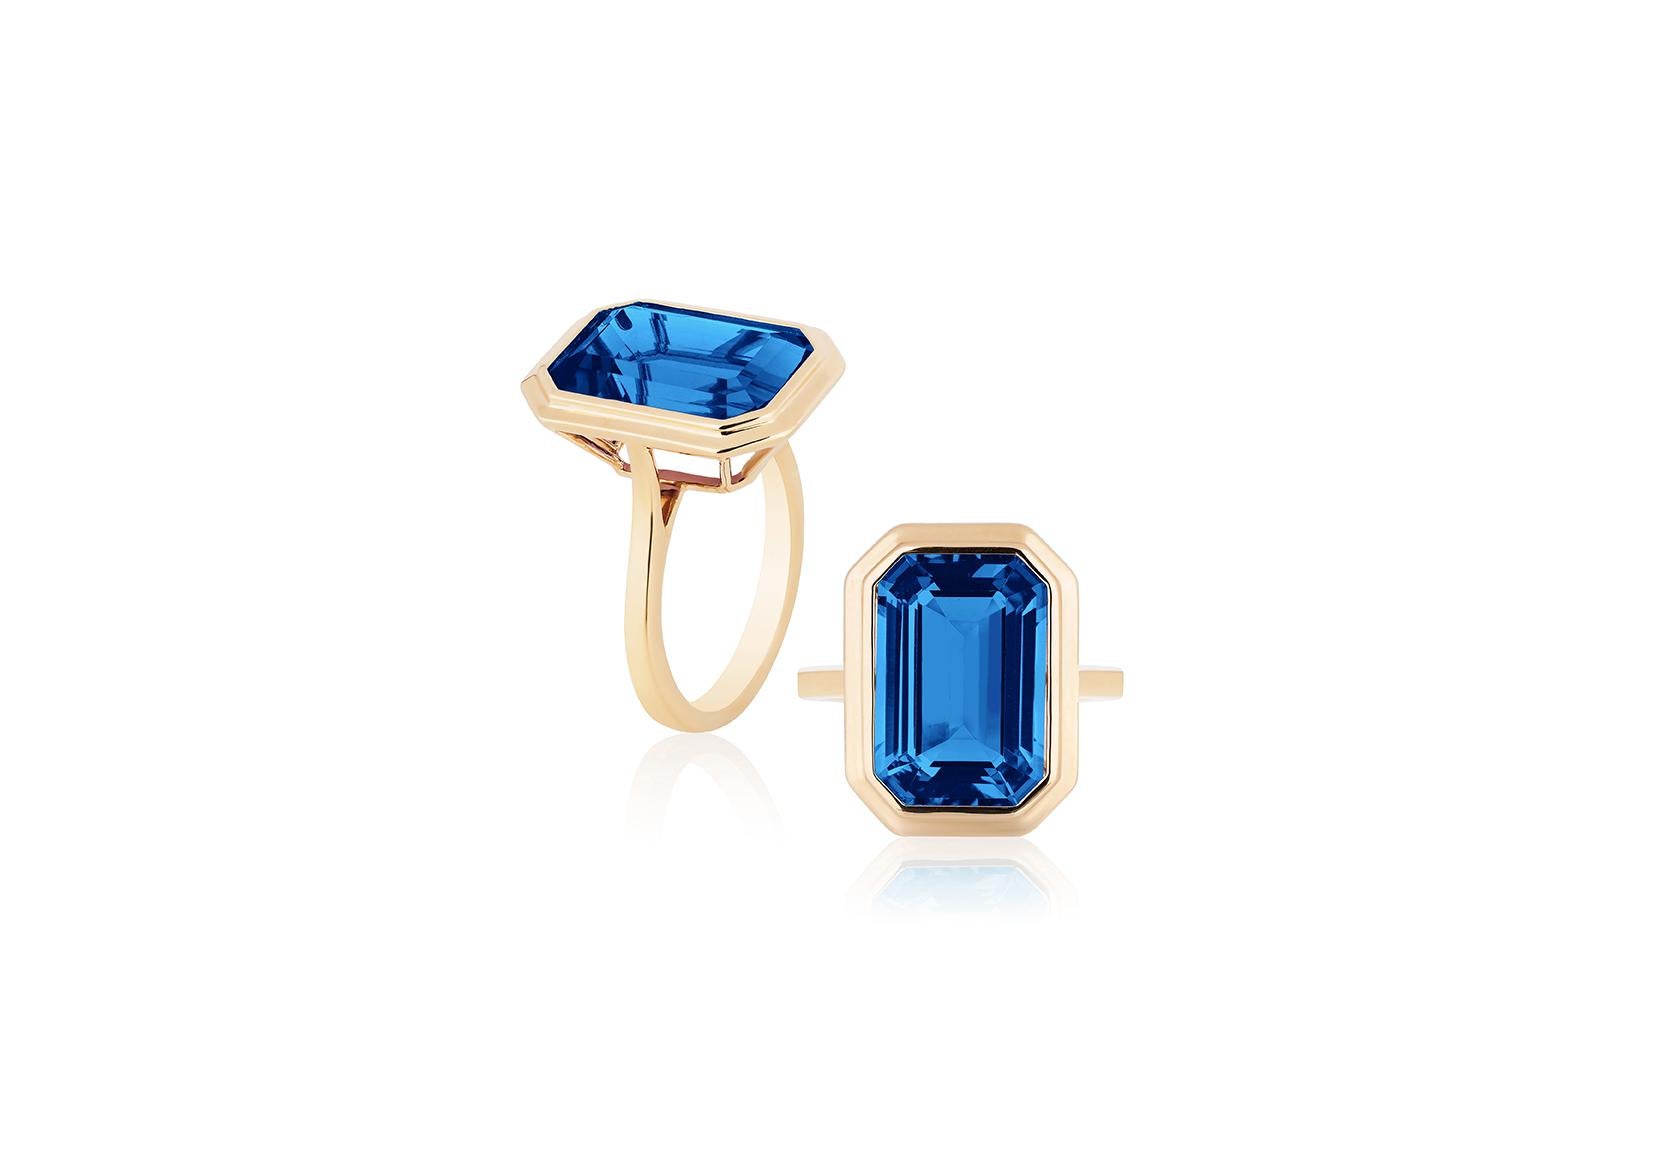 Contemporary Goshwara London Blue Topaz Emerald Cut Bezel Set Ring For Sale